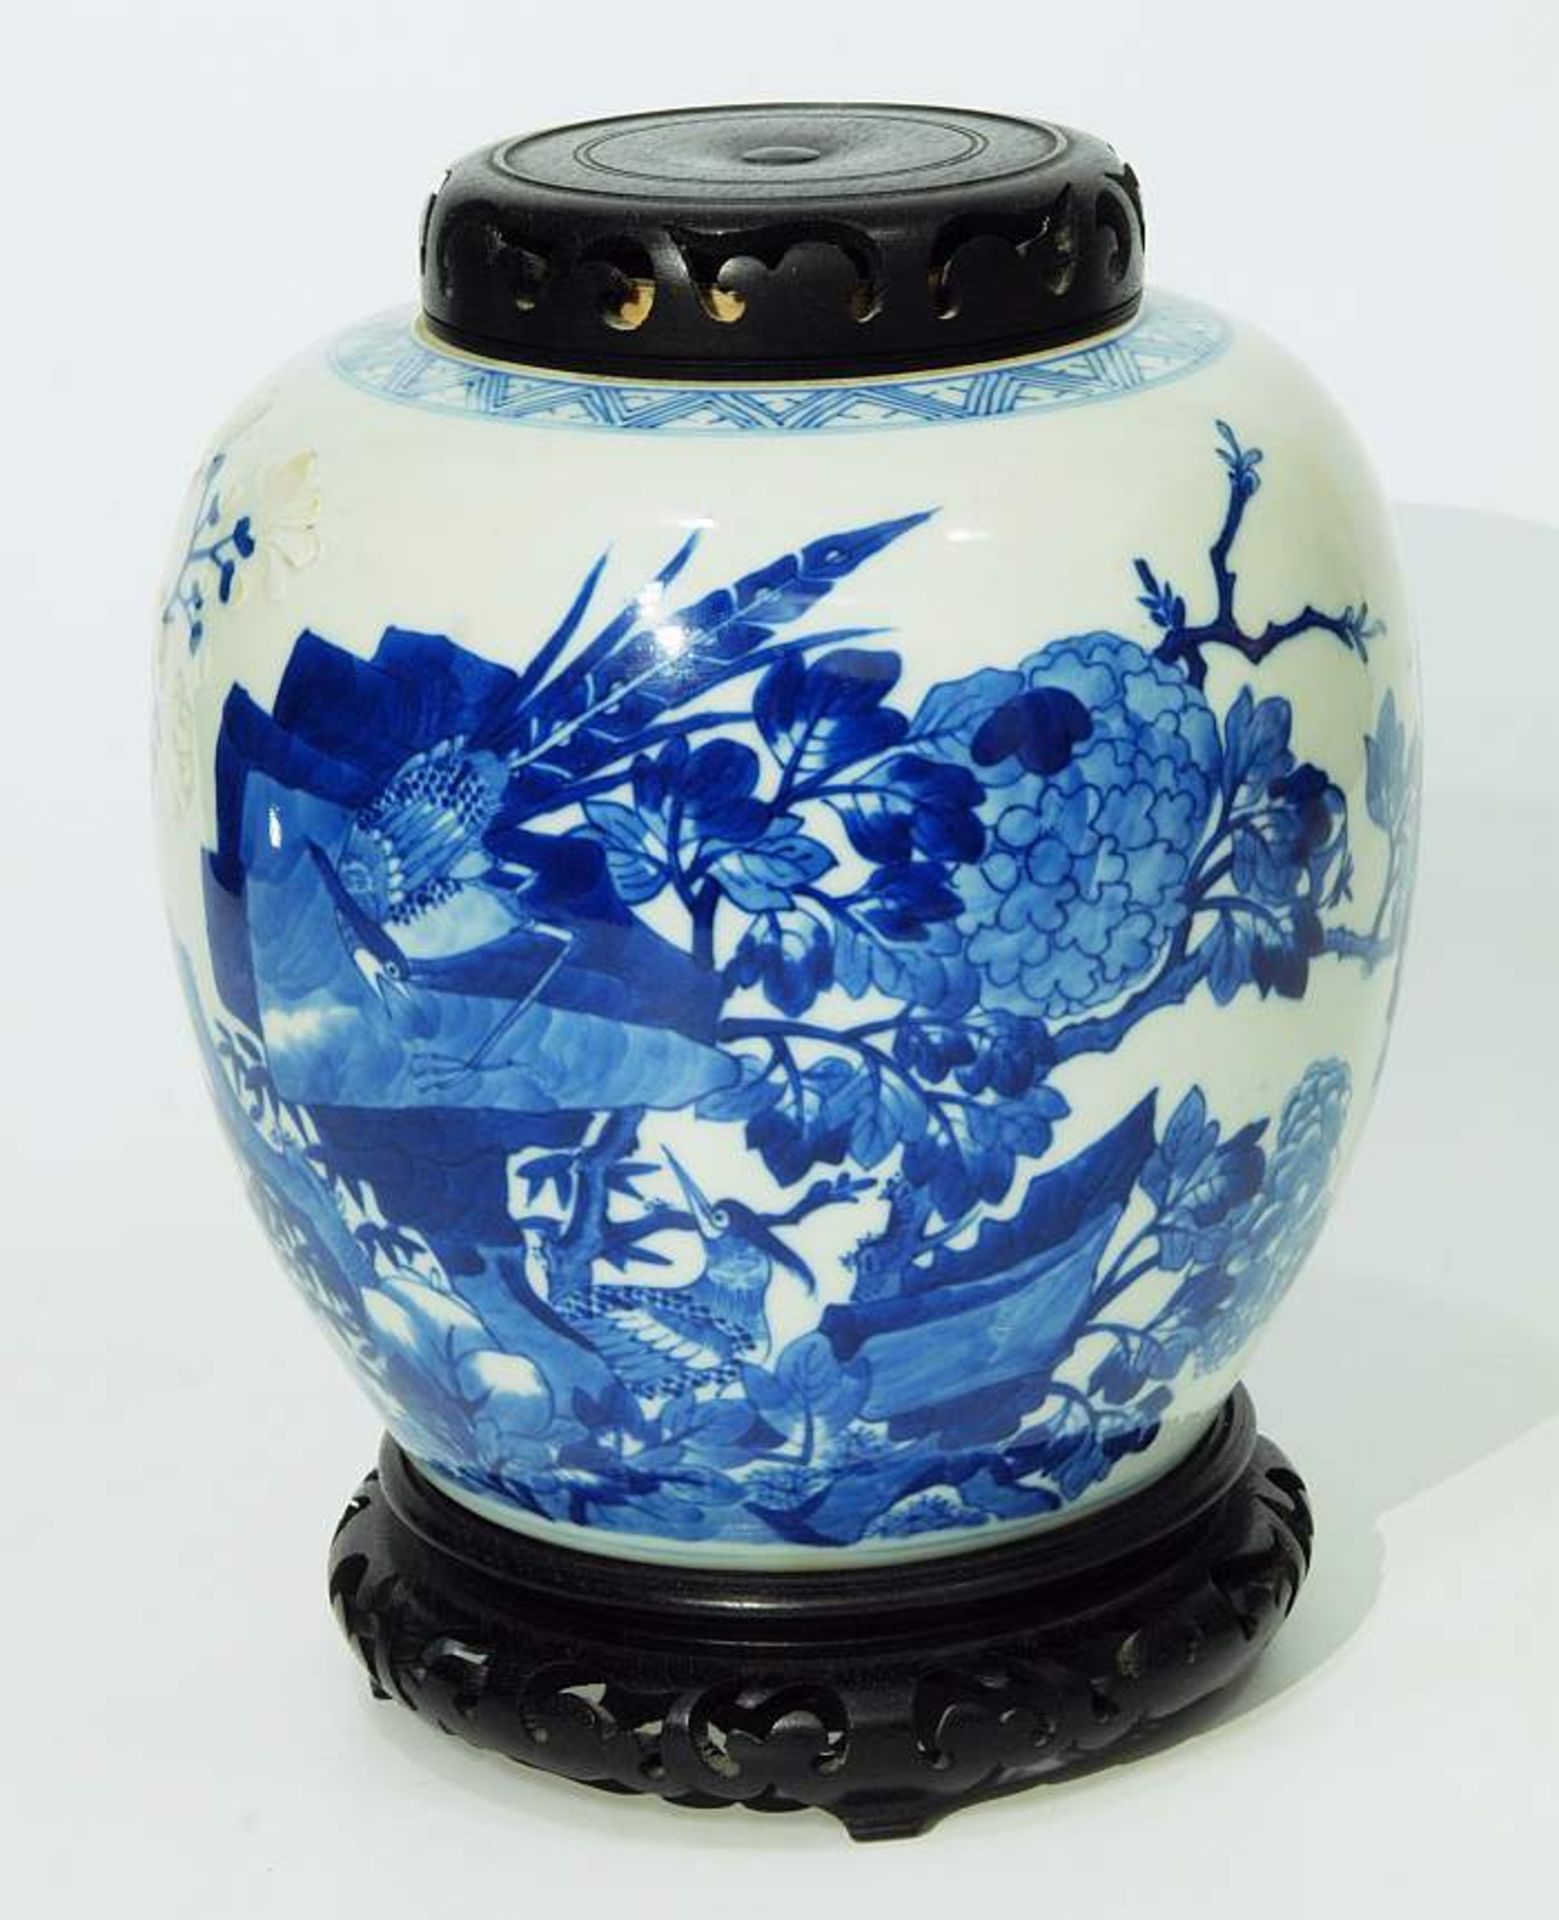 Deckeldose. Deckeldose. Shanghai, 19. Jahrhundert. Blau-weiß Dekor, florales Reliefdekor. Bauchige